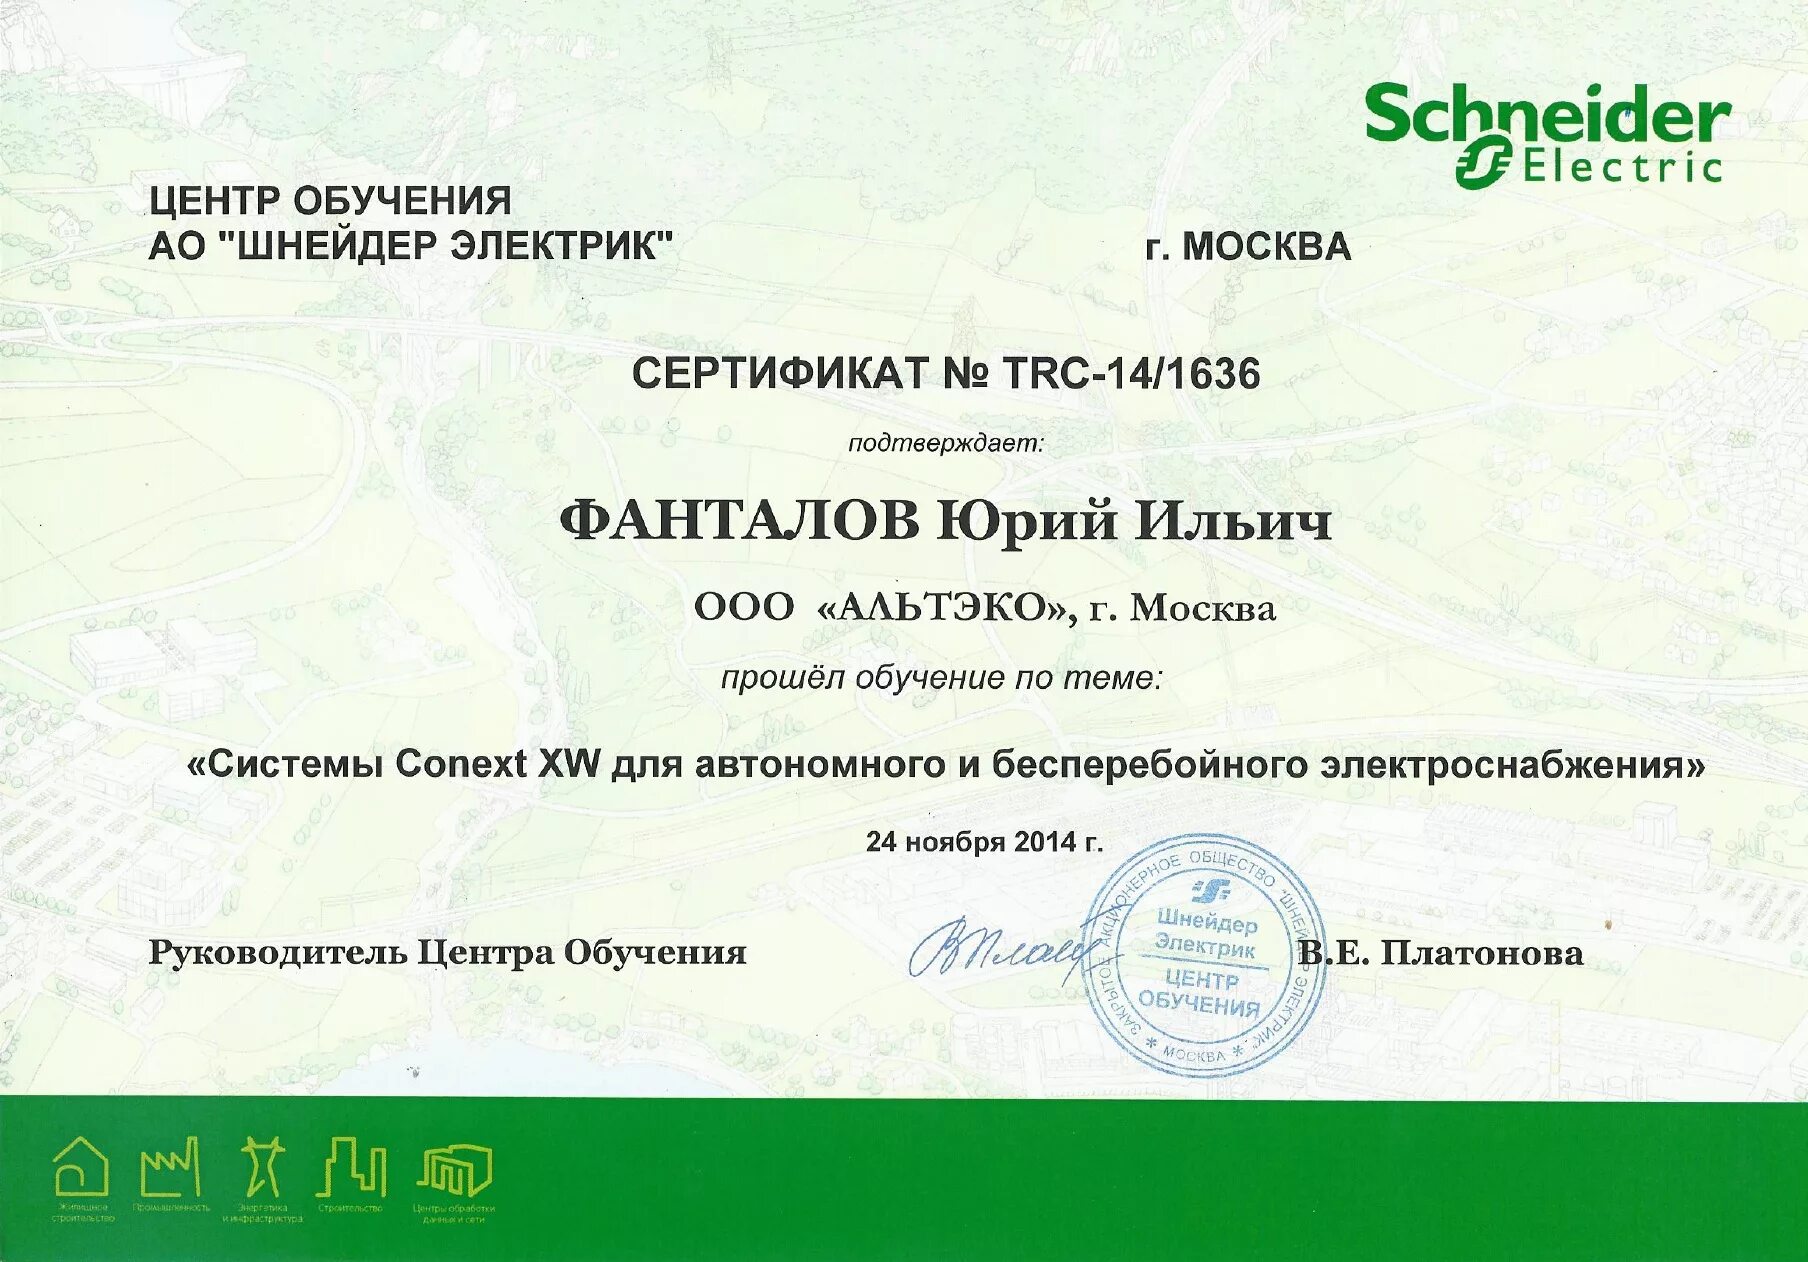 Certificate crt. Сертификат Schneider Electric Unity. Сертификат Schneider Electric обучение. Шнейдер электрик сертификаты. Сертификат дилера Шнайдер электрик.